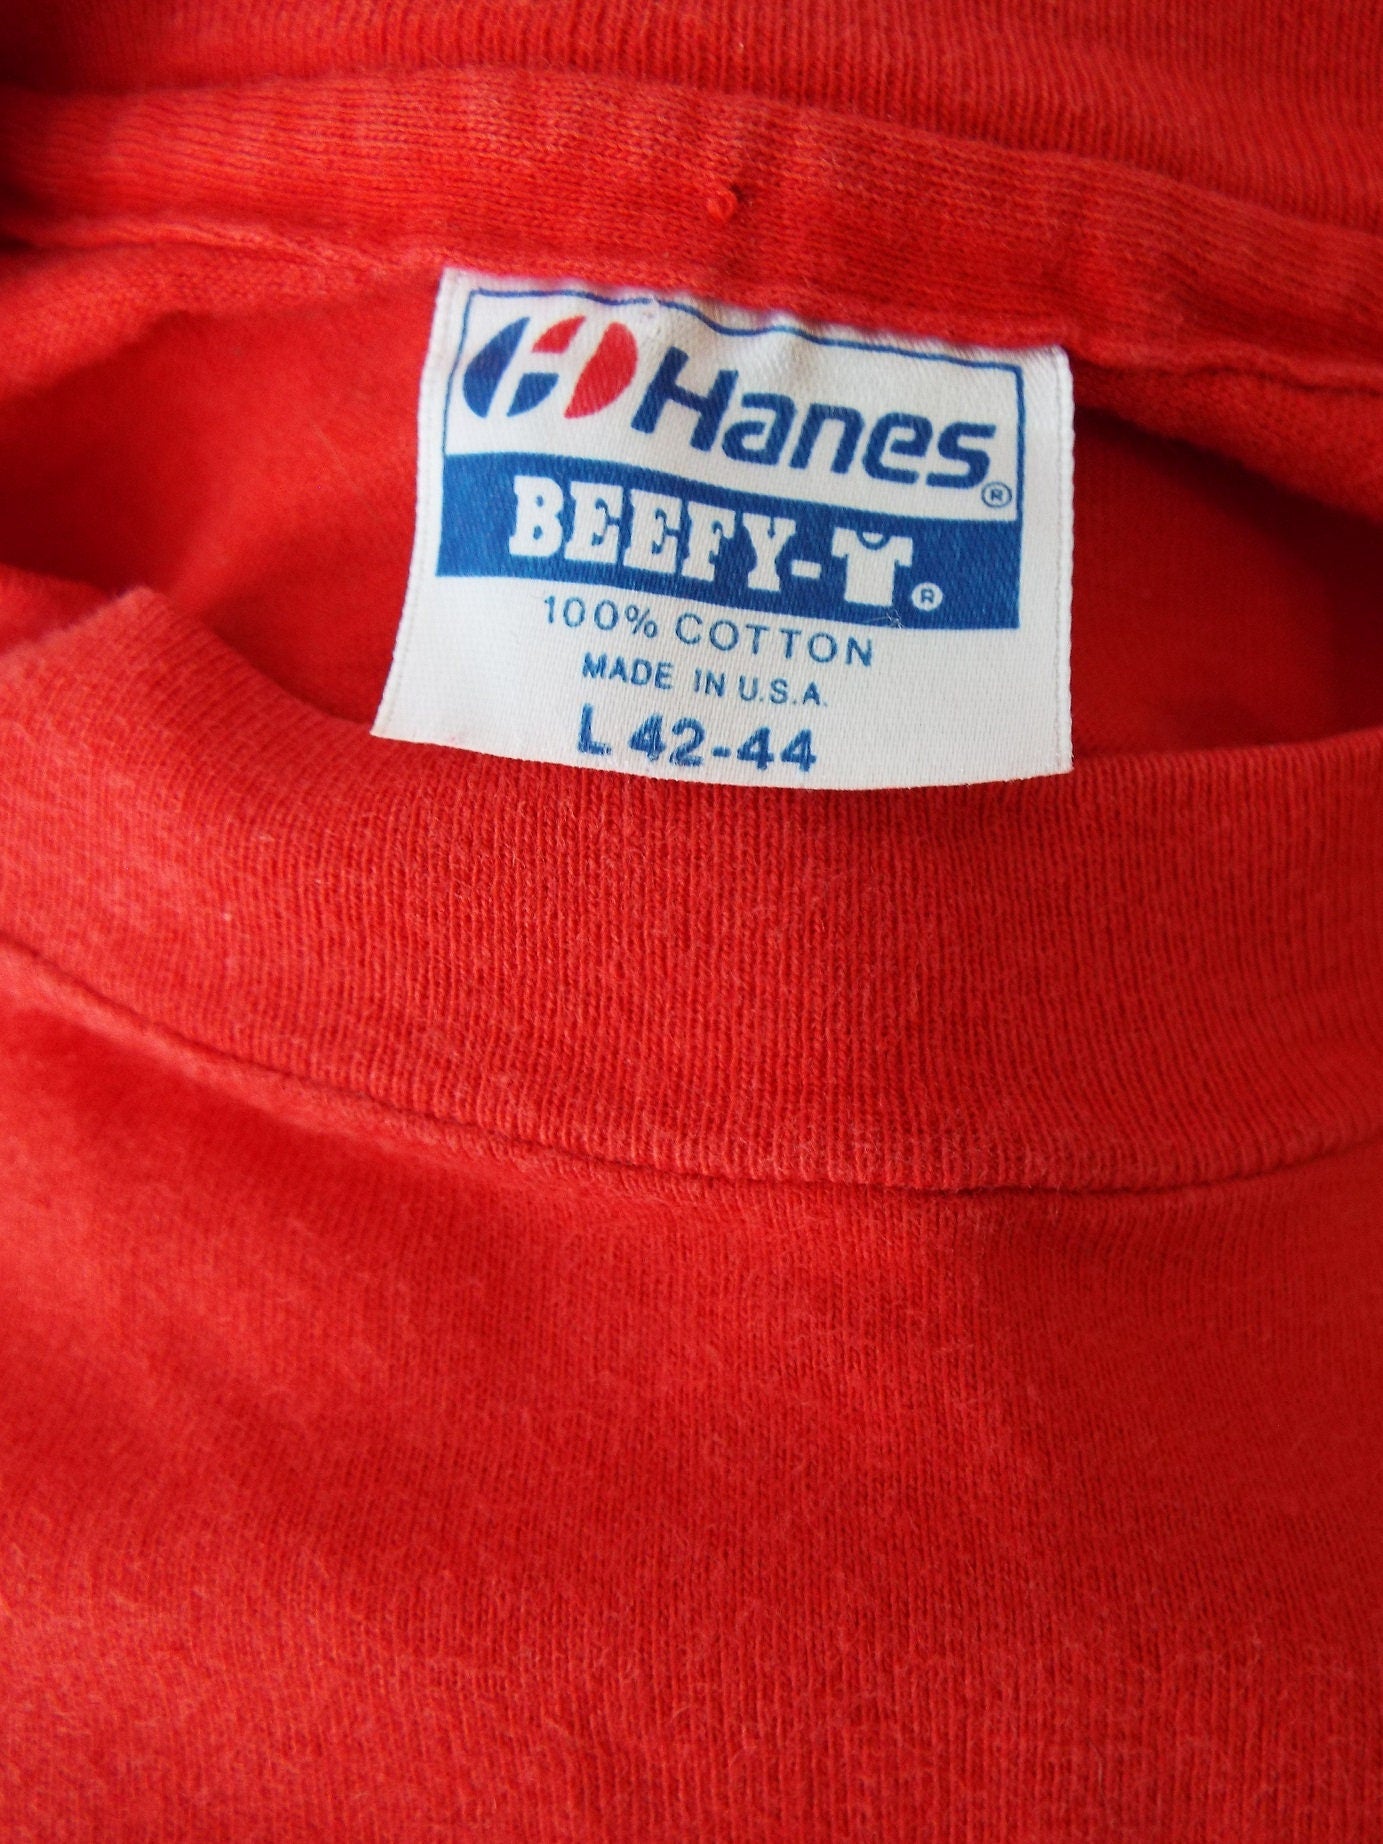 Vintage Long Sleeve LL BeanT Shirt by Hanes